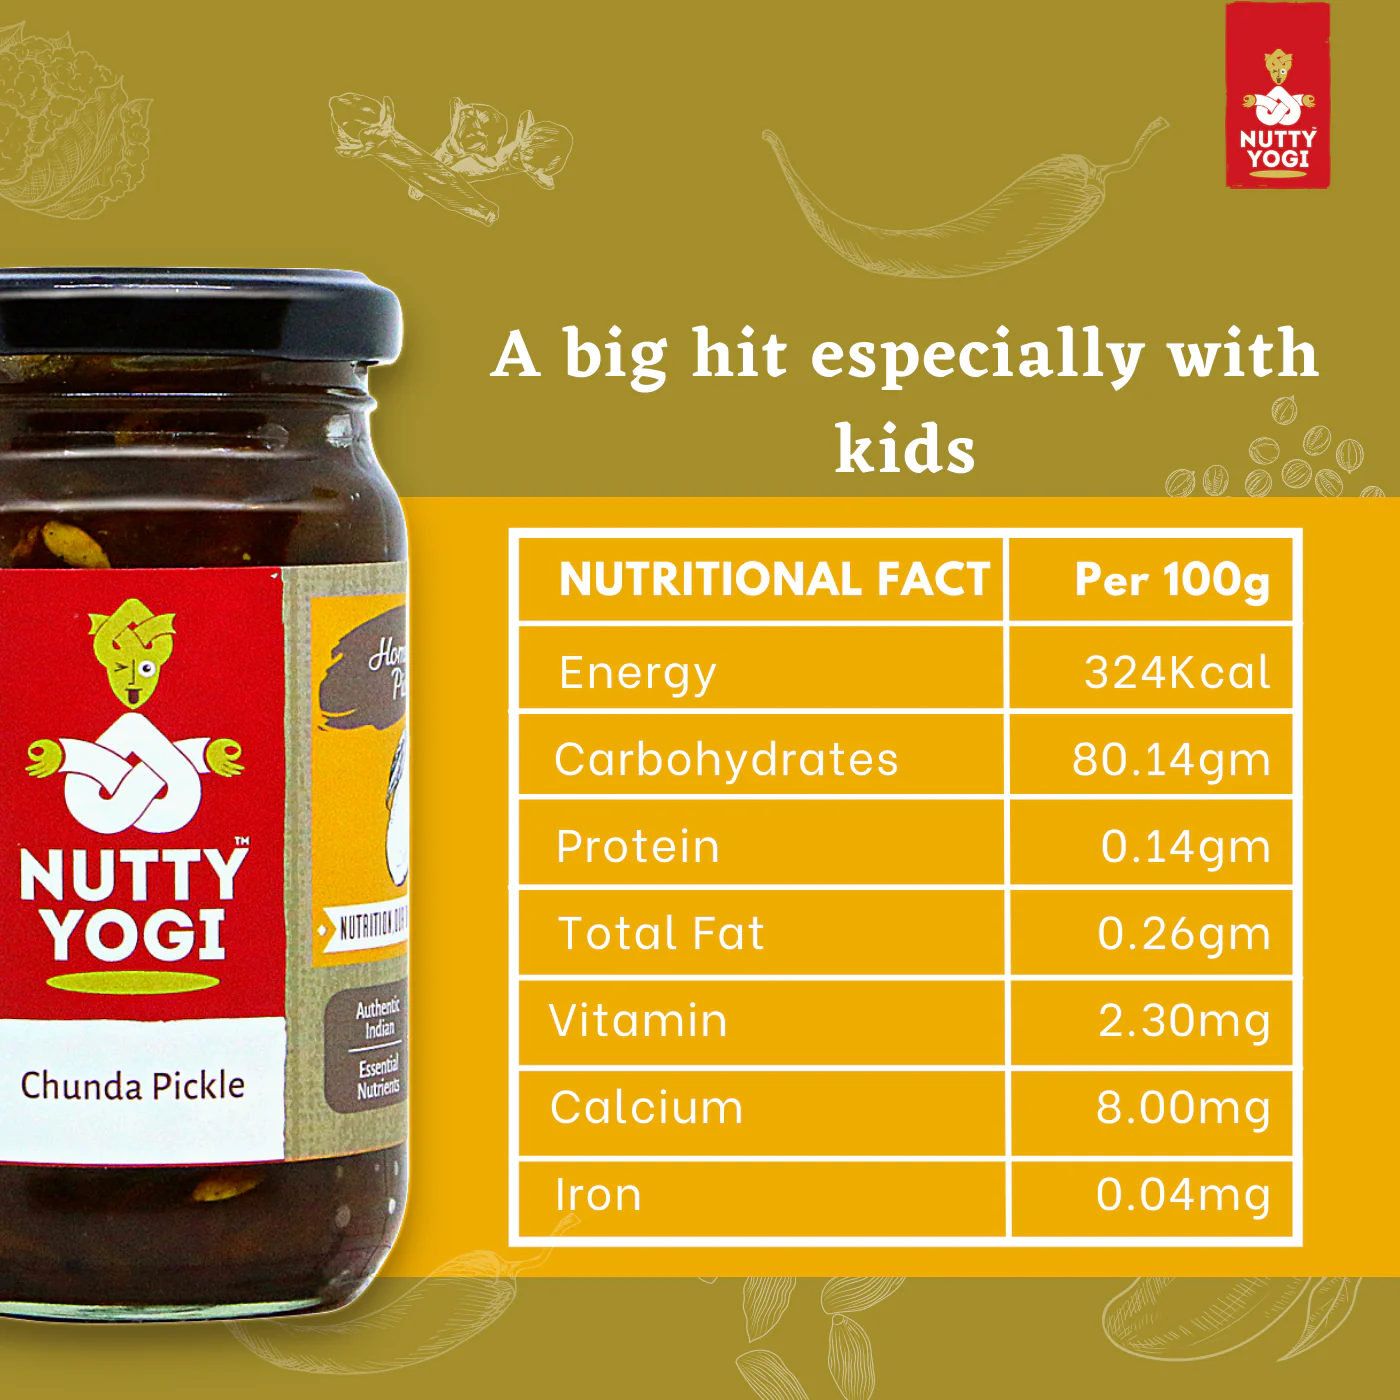 Product: Nutty Yogi Chunda Pickle 250 g